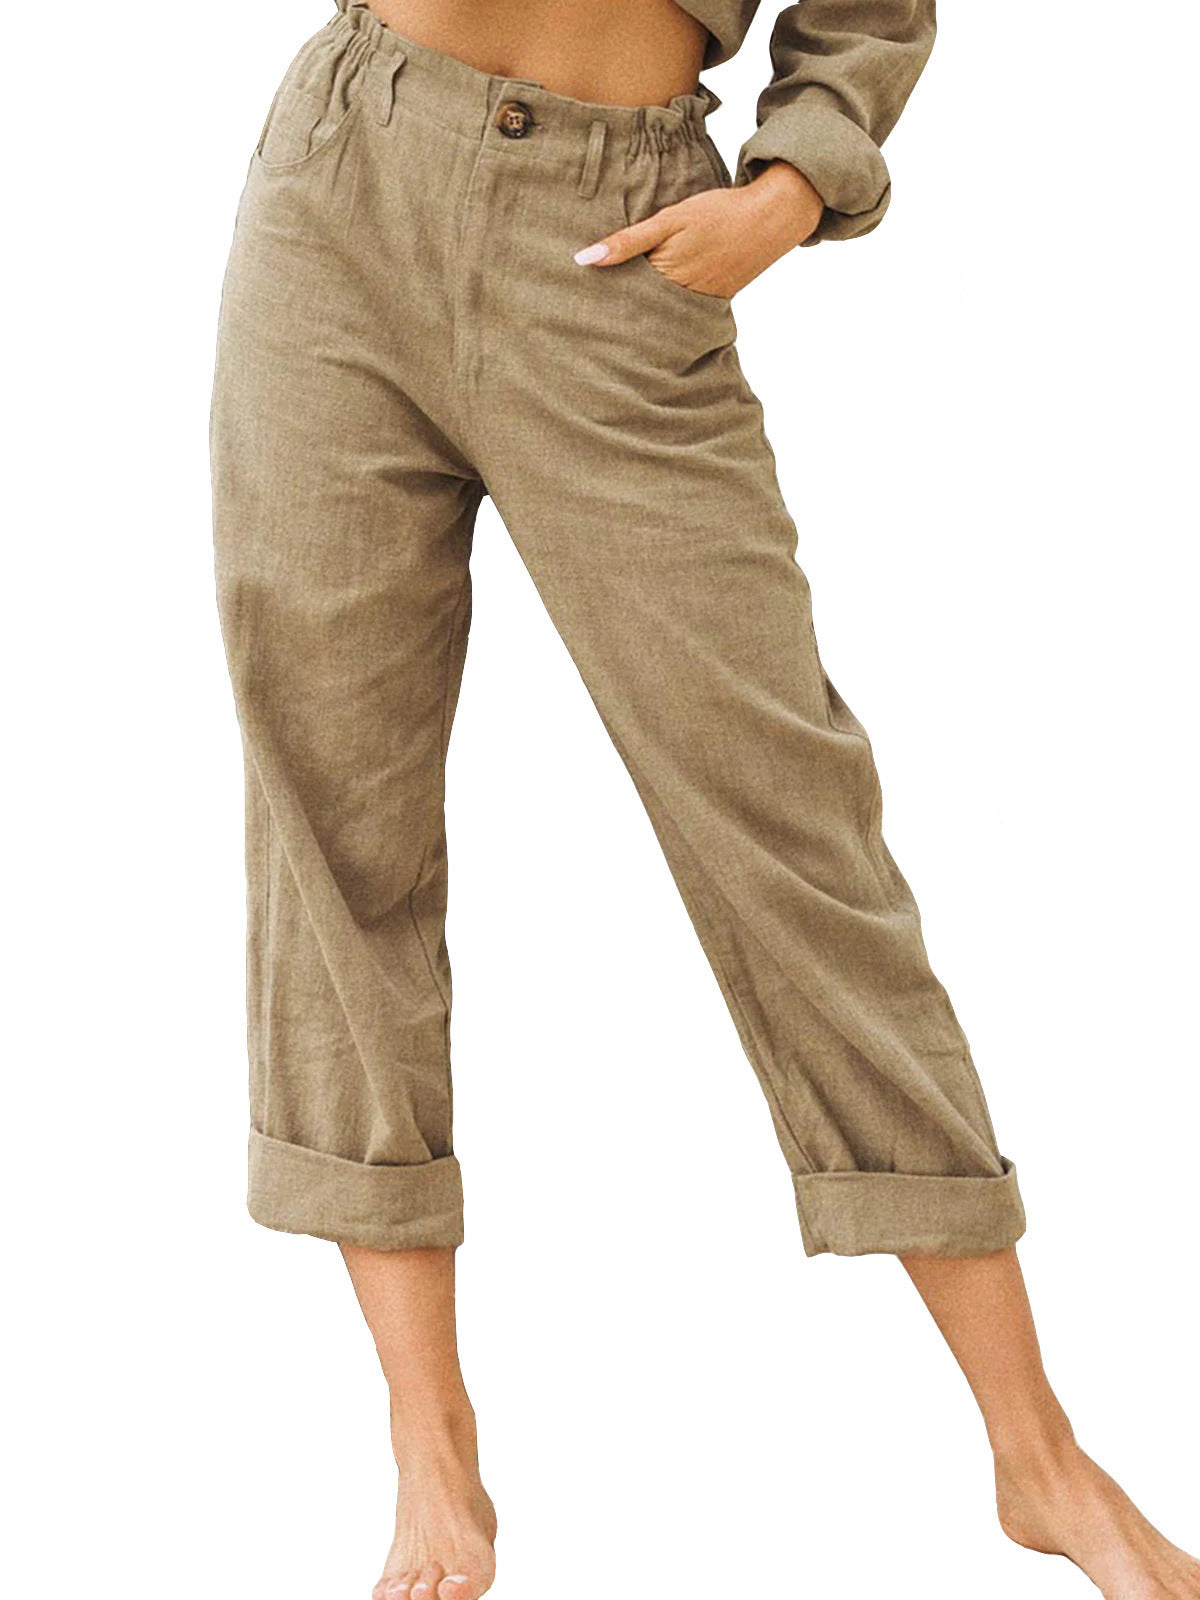 Women's Solid Color Cotton Linen Fashion Loose High Waist Casual Pants